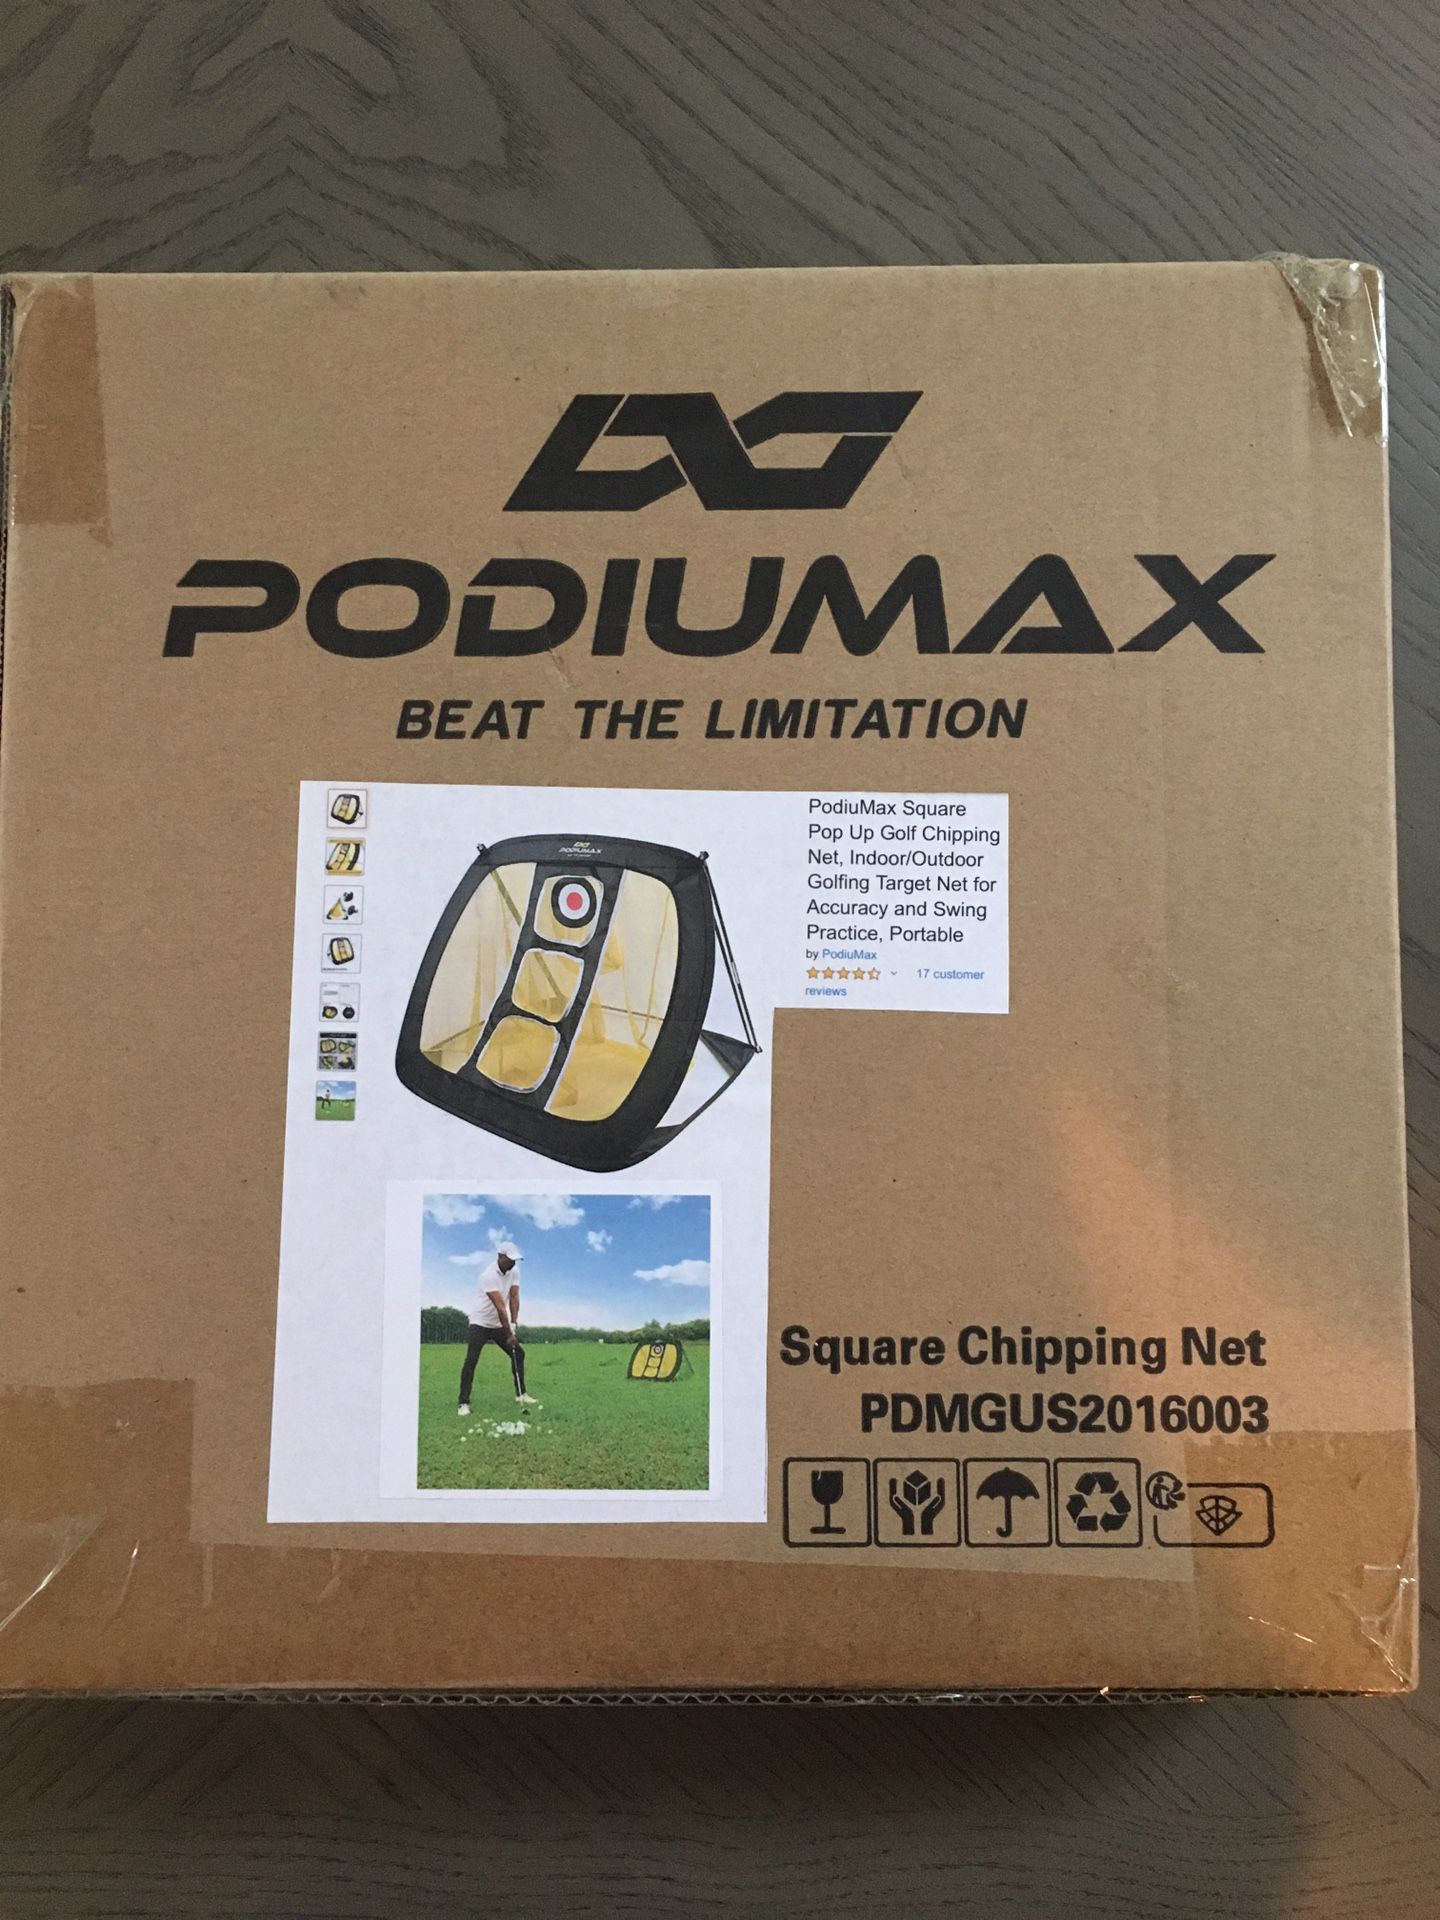 PodiuMax Square Pop Up Golf Chipping Net